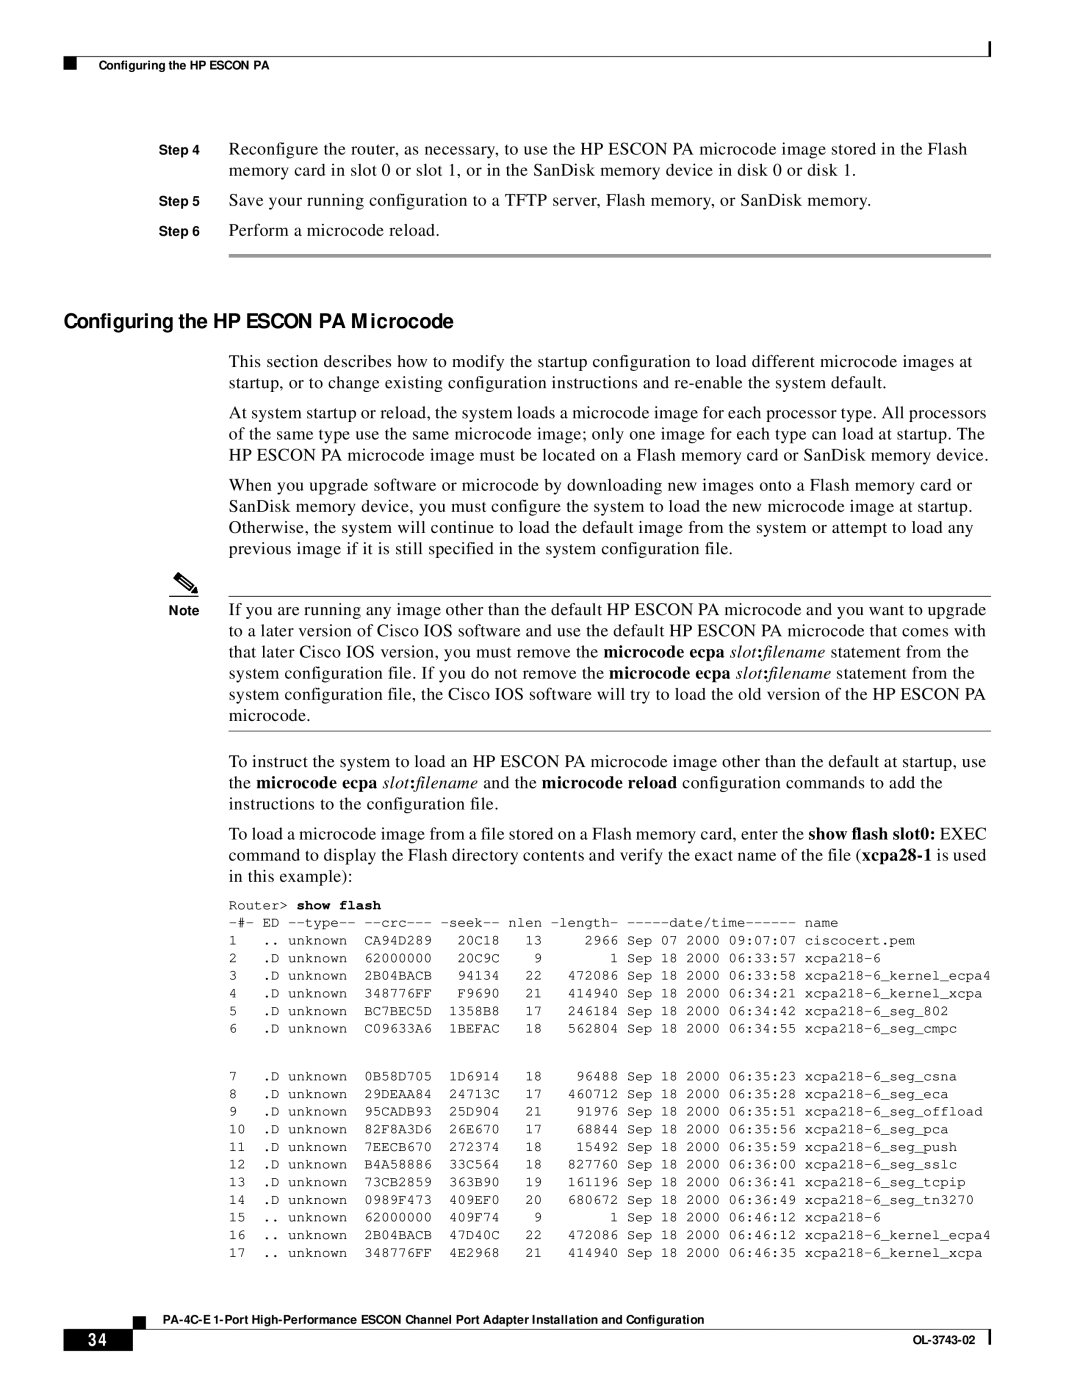 Cisco Systems PA-4C-E 1 manual Configuring the HP ESCON PA Microcode 